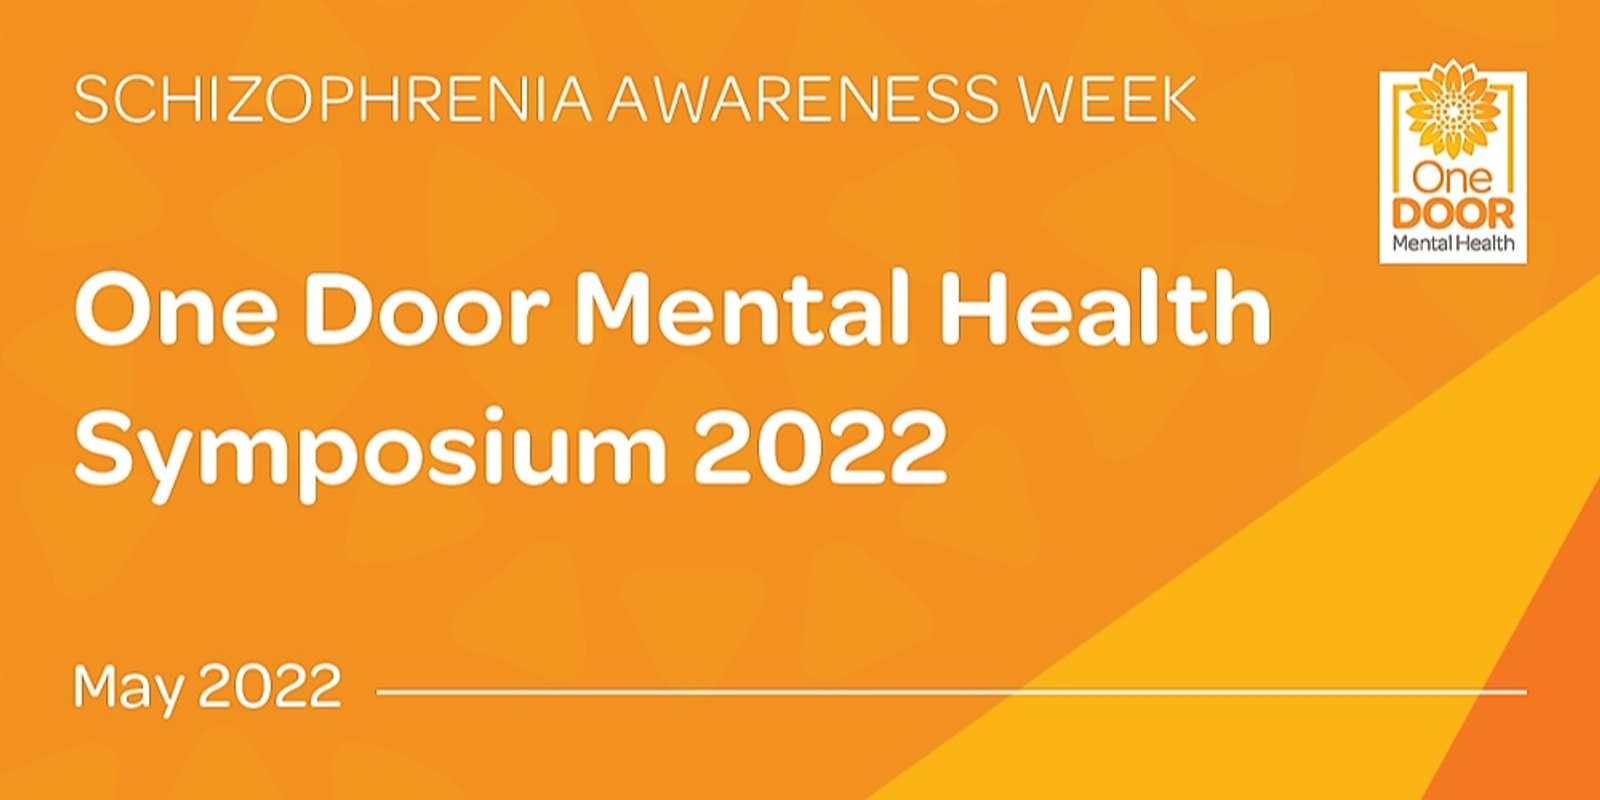 One Door Mental Health Symposium 2022 